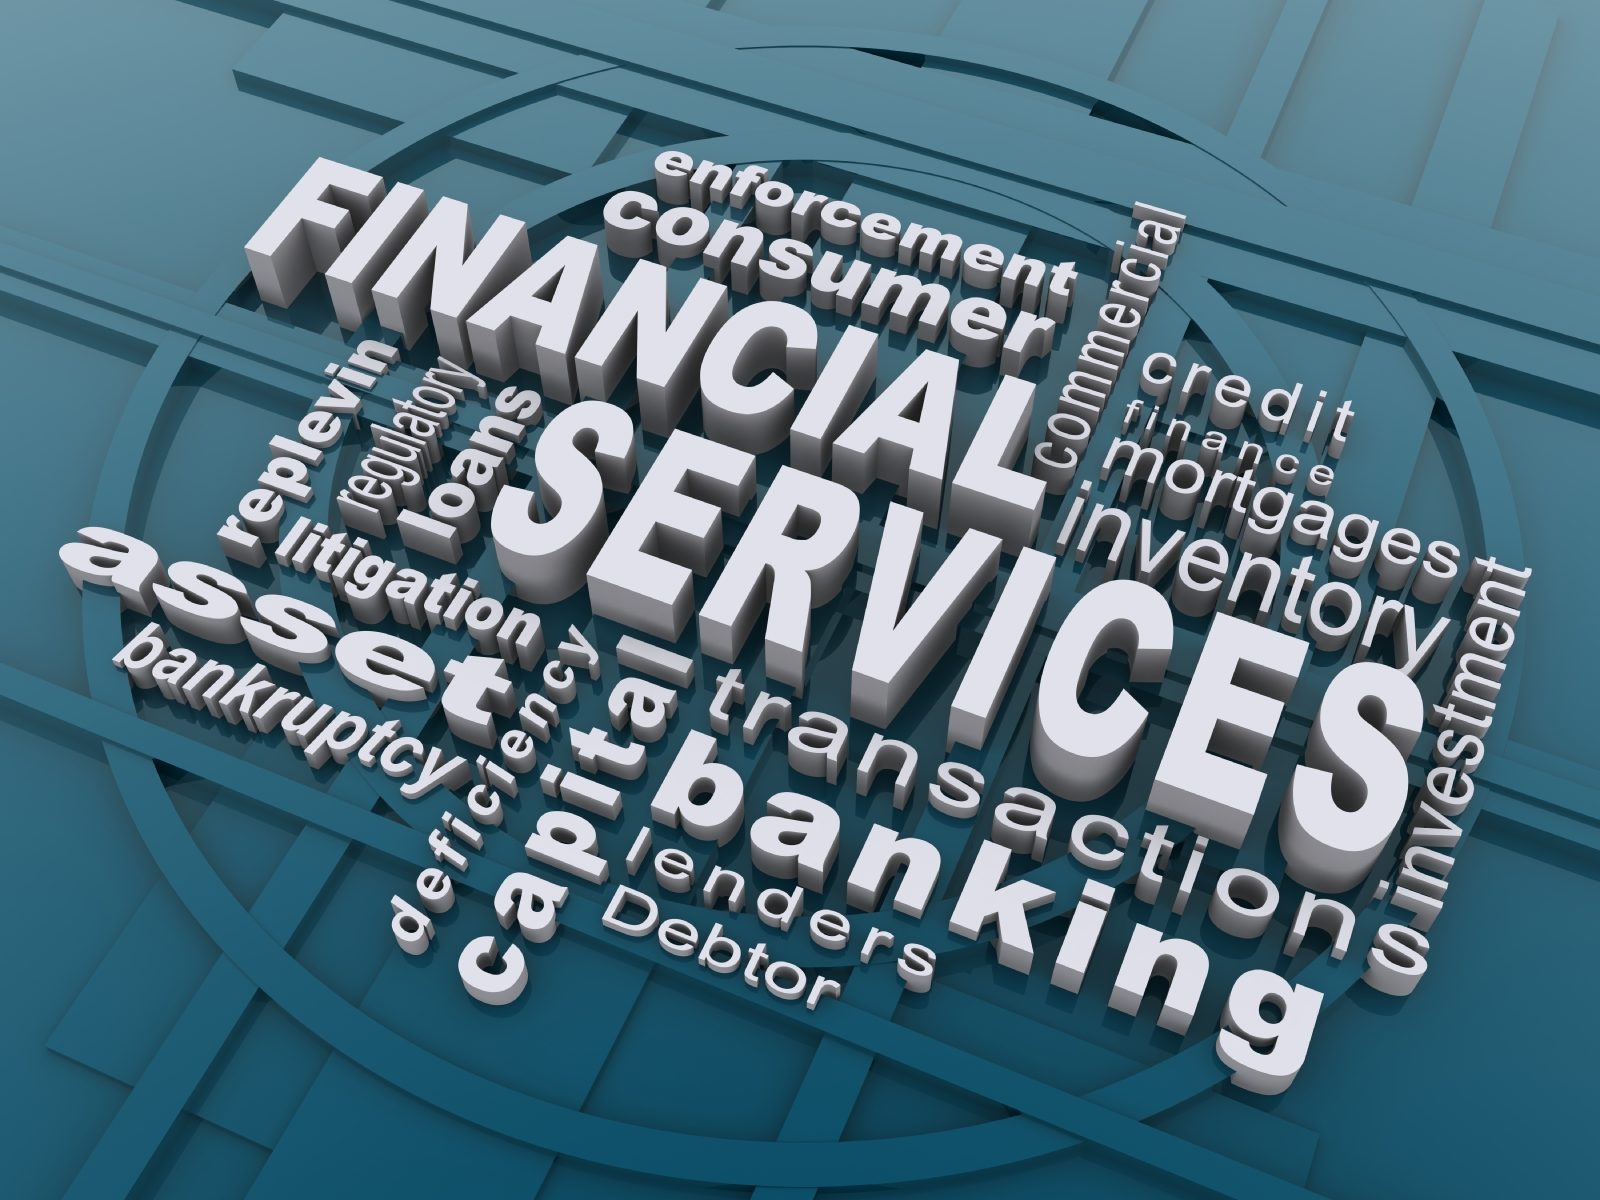 service finance company